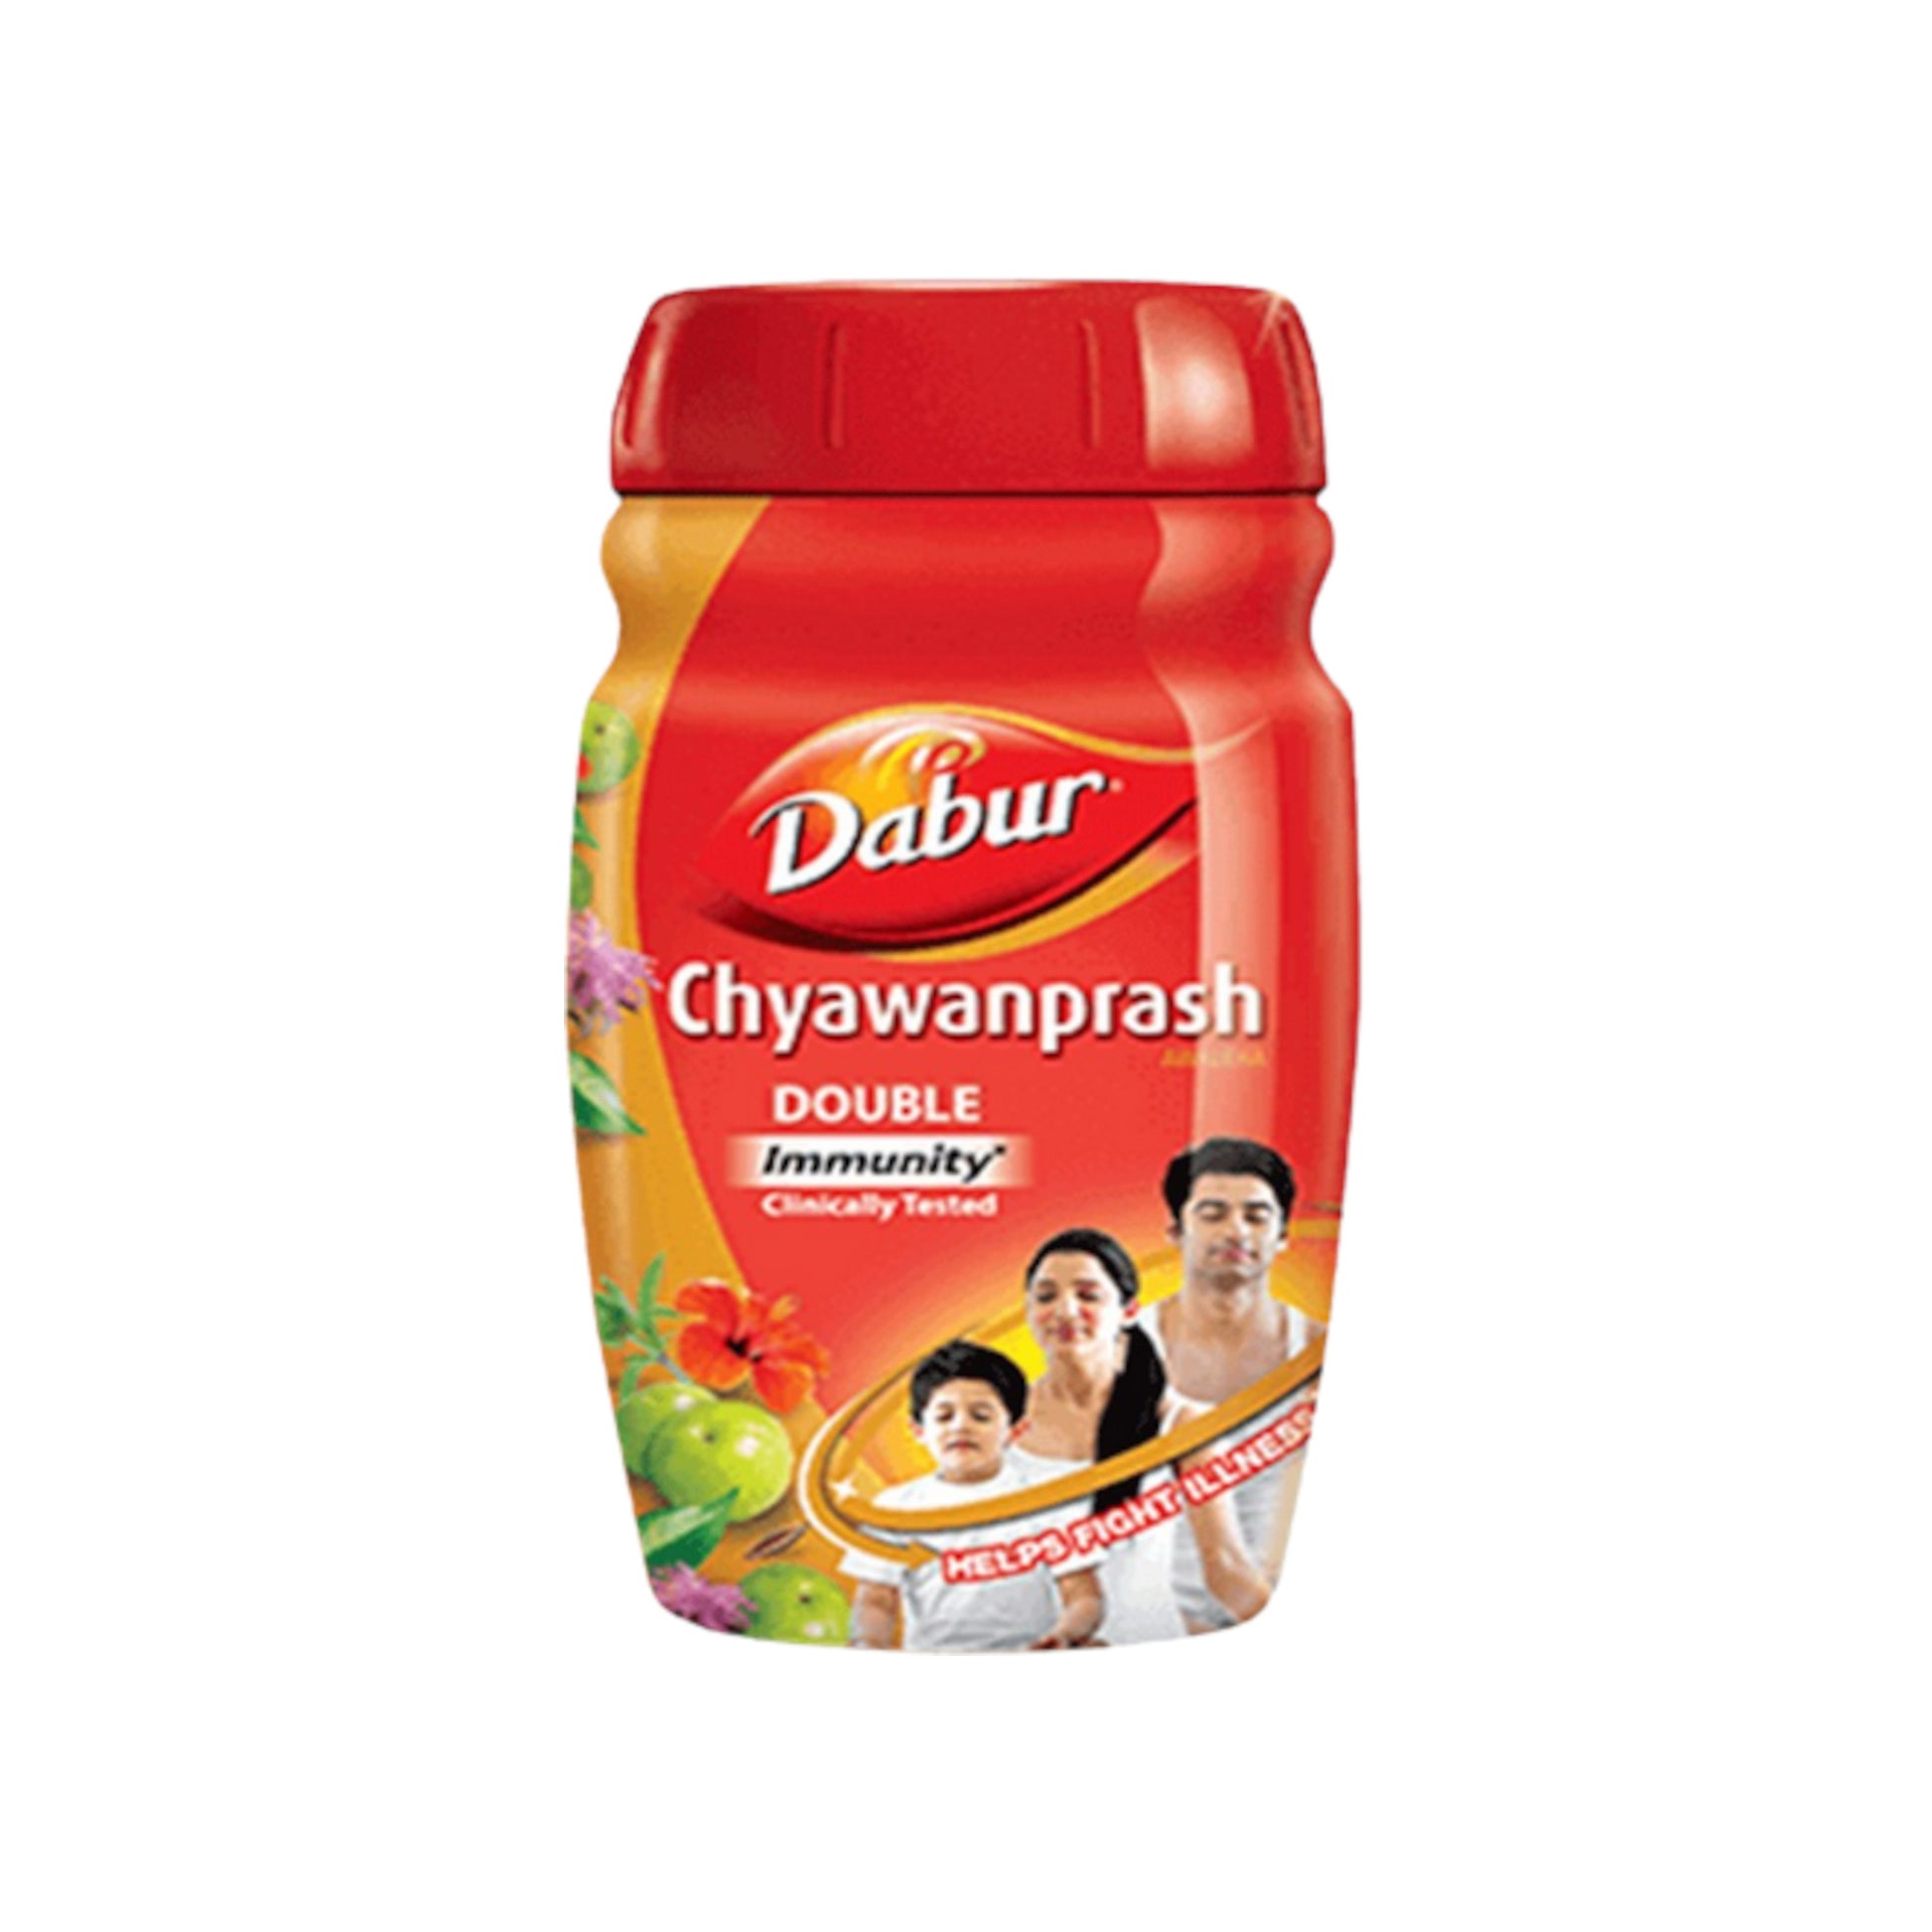 Image of Dabur Chyawanprash 250 g: A Time-Tested Ayurvedic Immunity Booster with Antioxidant Properties.